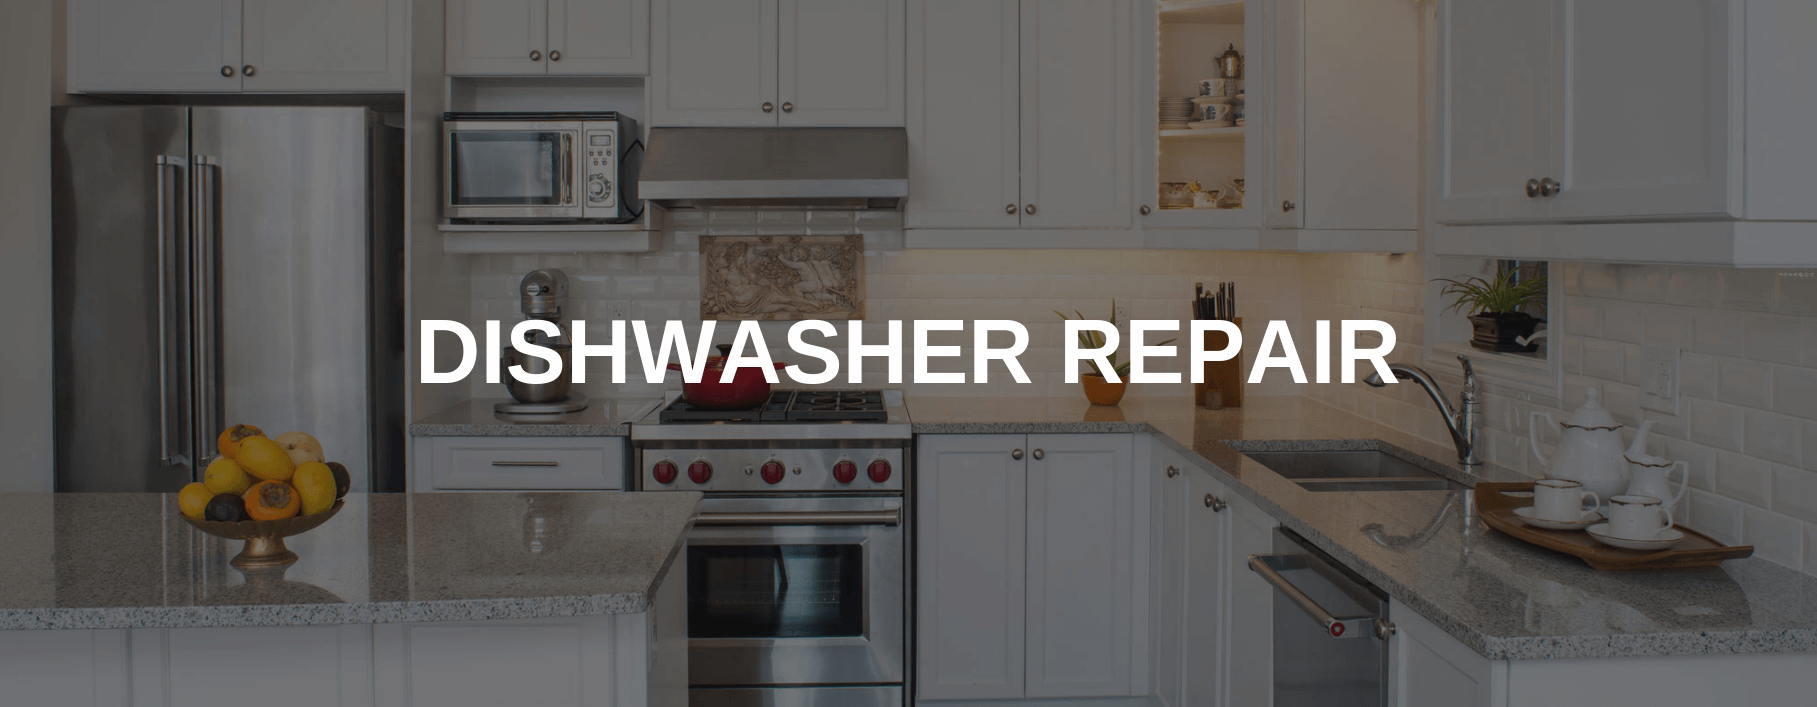 dishwasher repair new rochelle